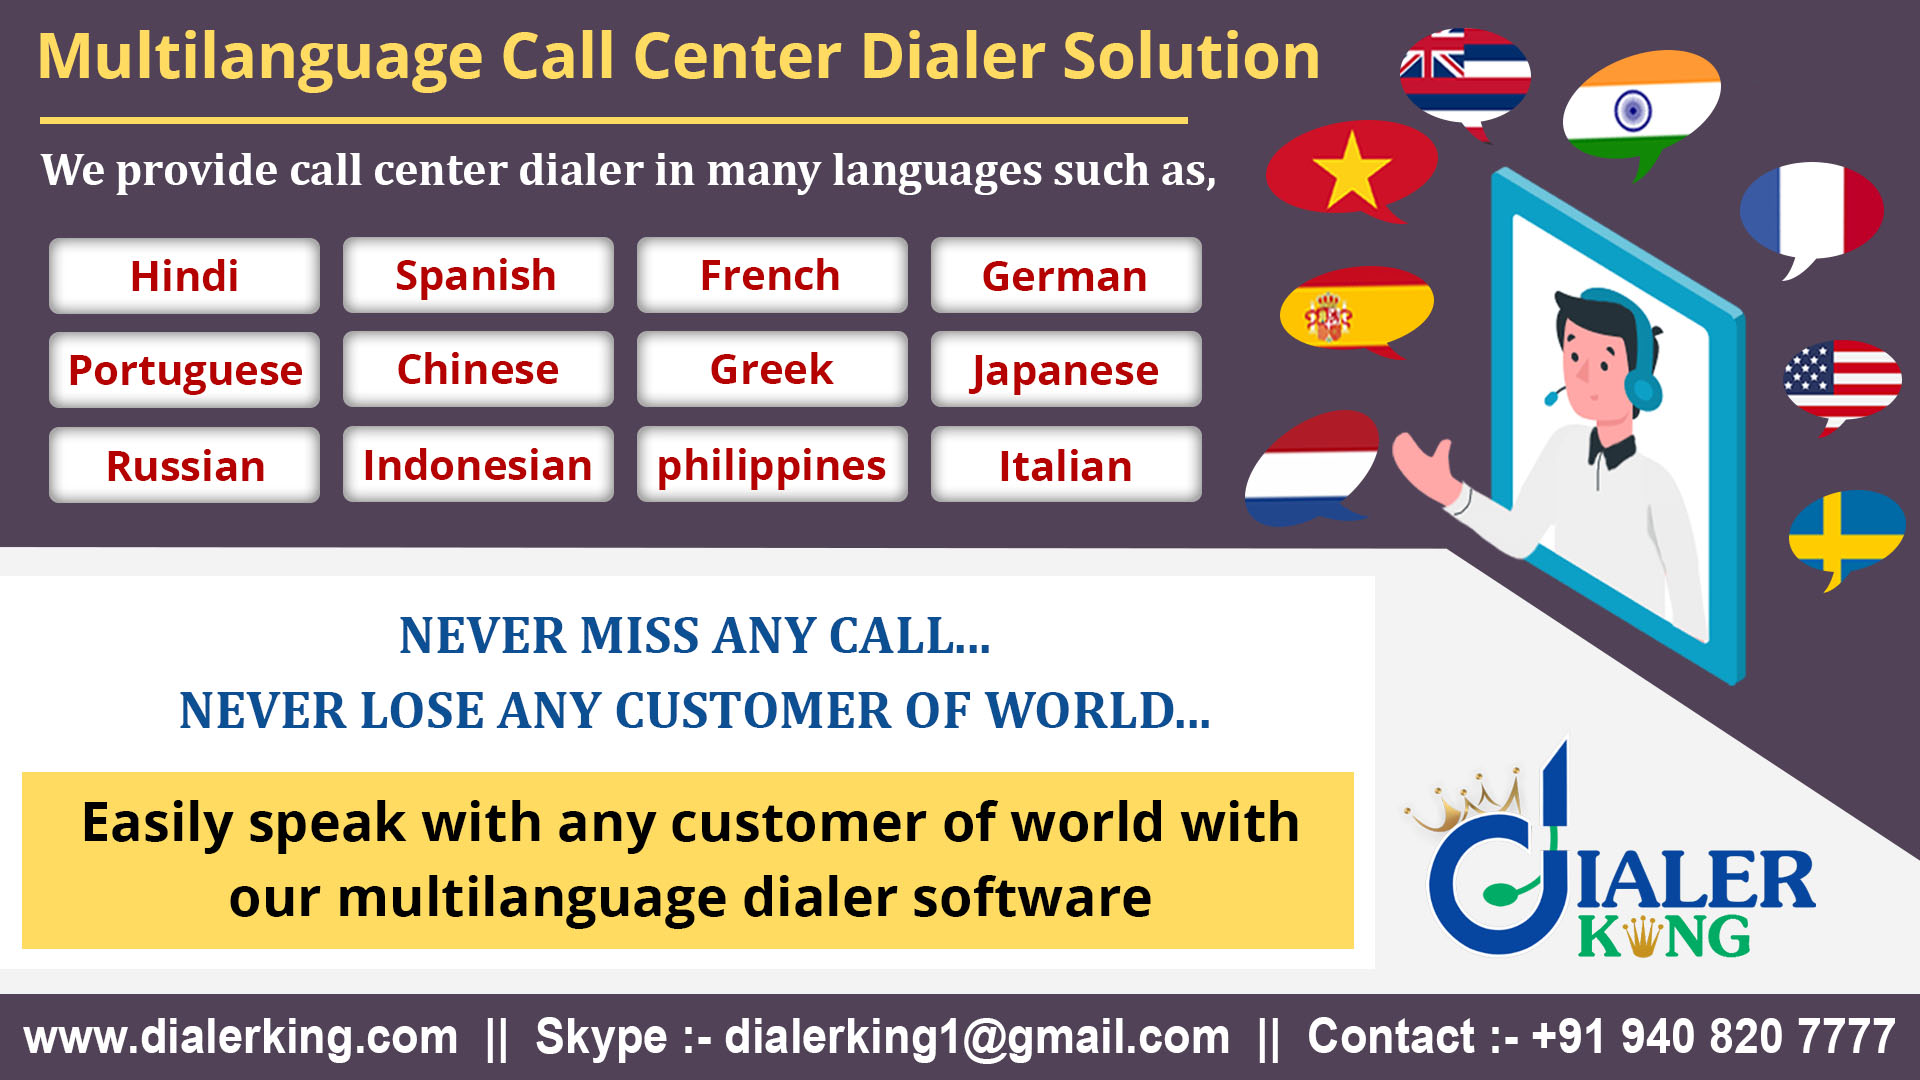 23911multiple call center solution